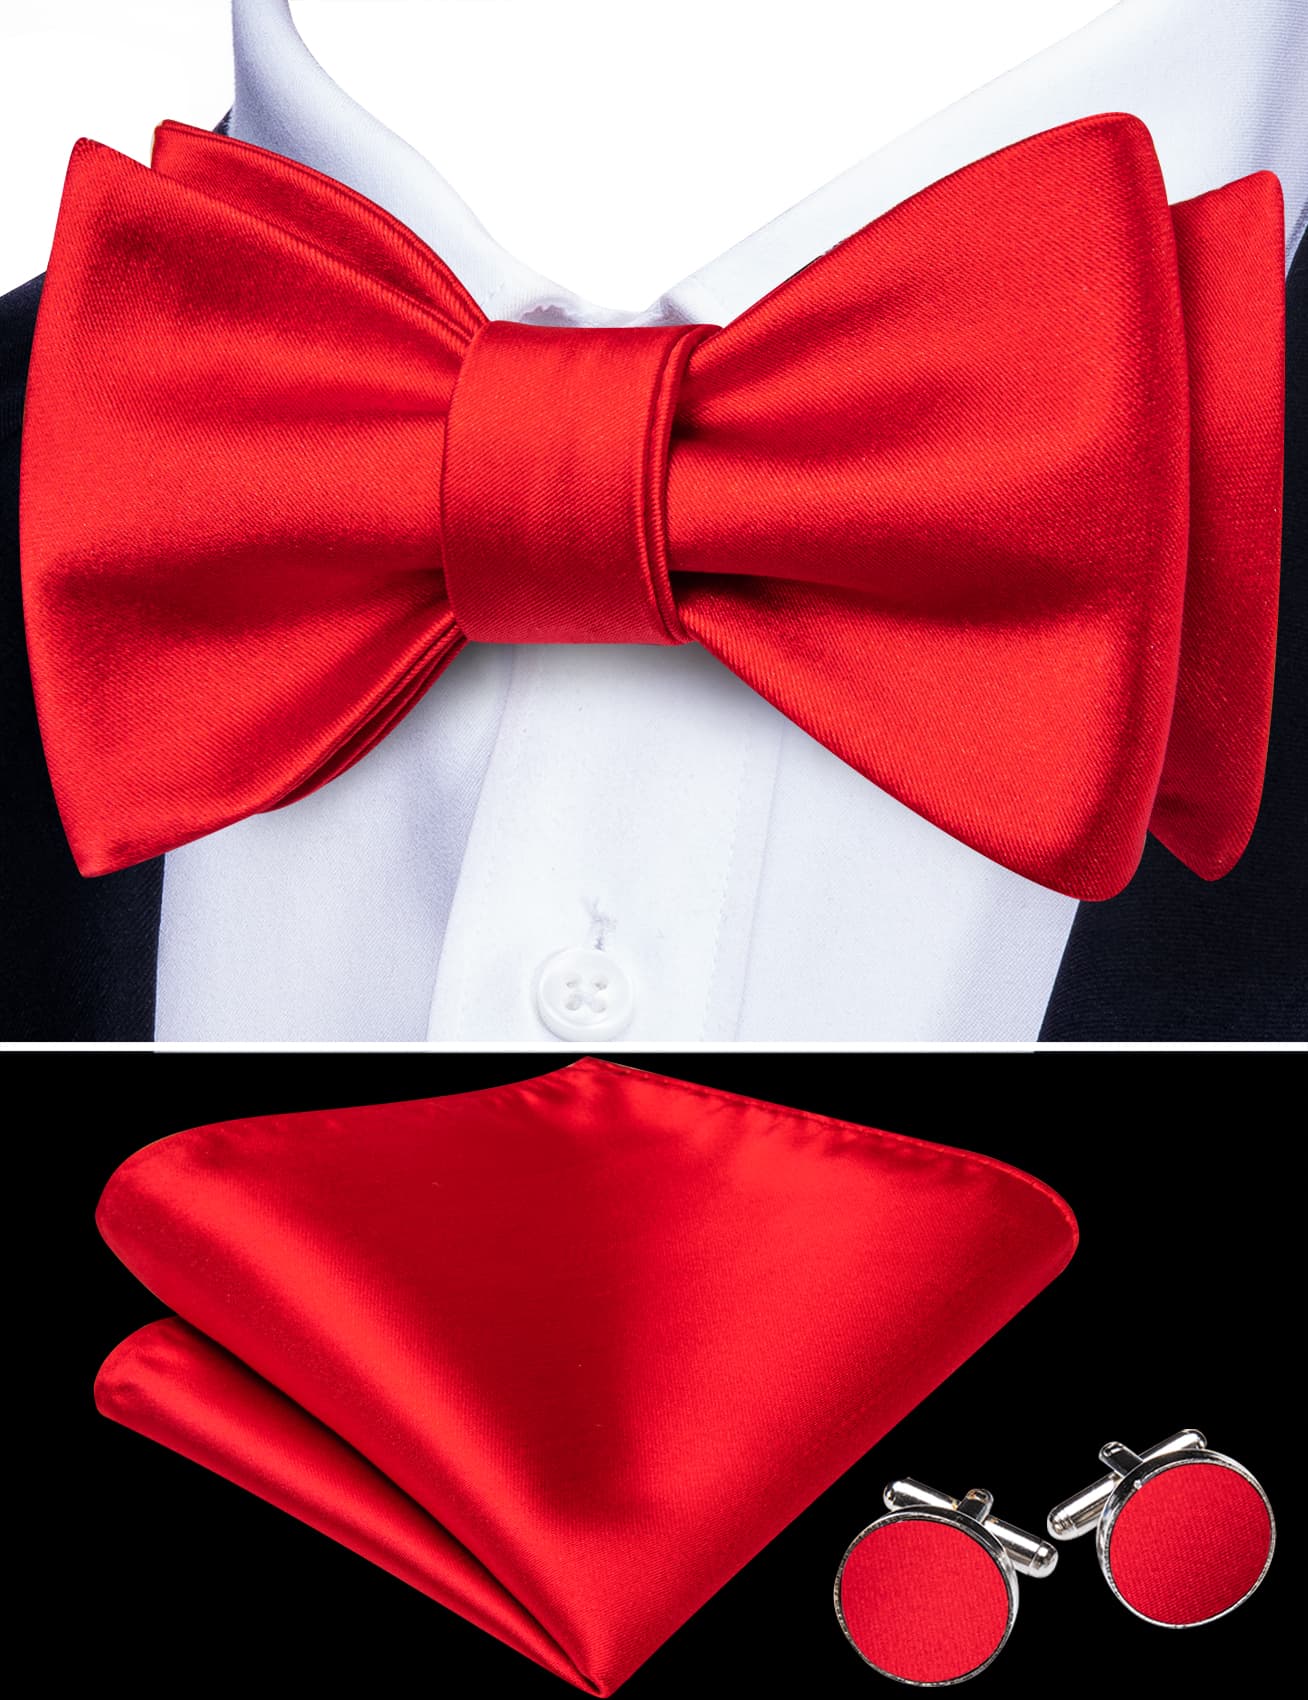 black suit red tie splf bow tie with black suit  red bow tie